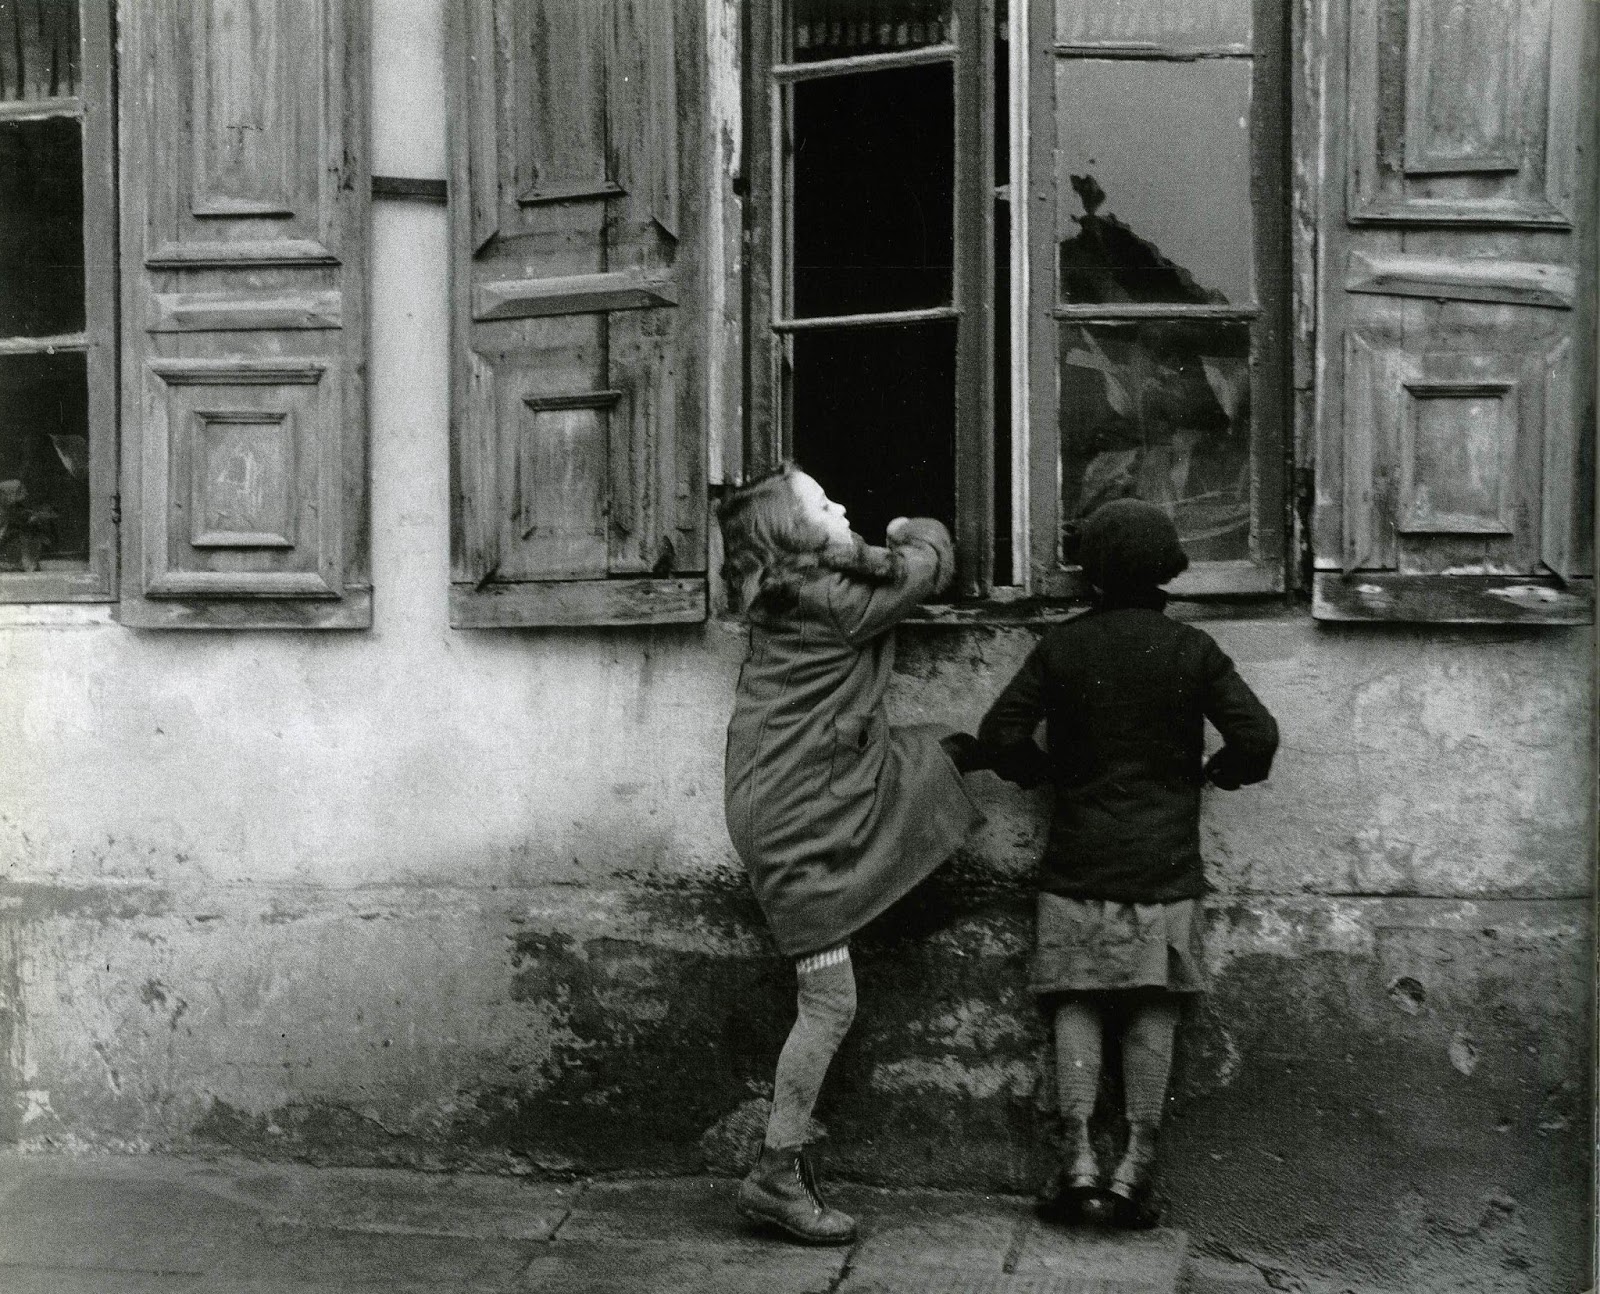 20 Fascinating Black and White Photographs Captured Jewish Children's